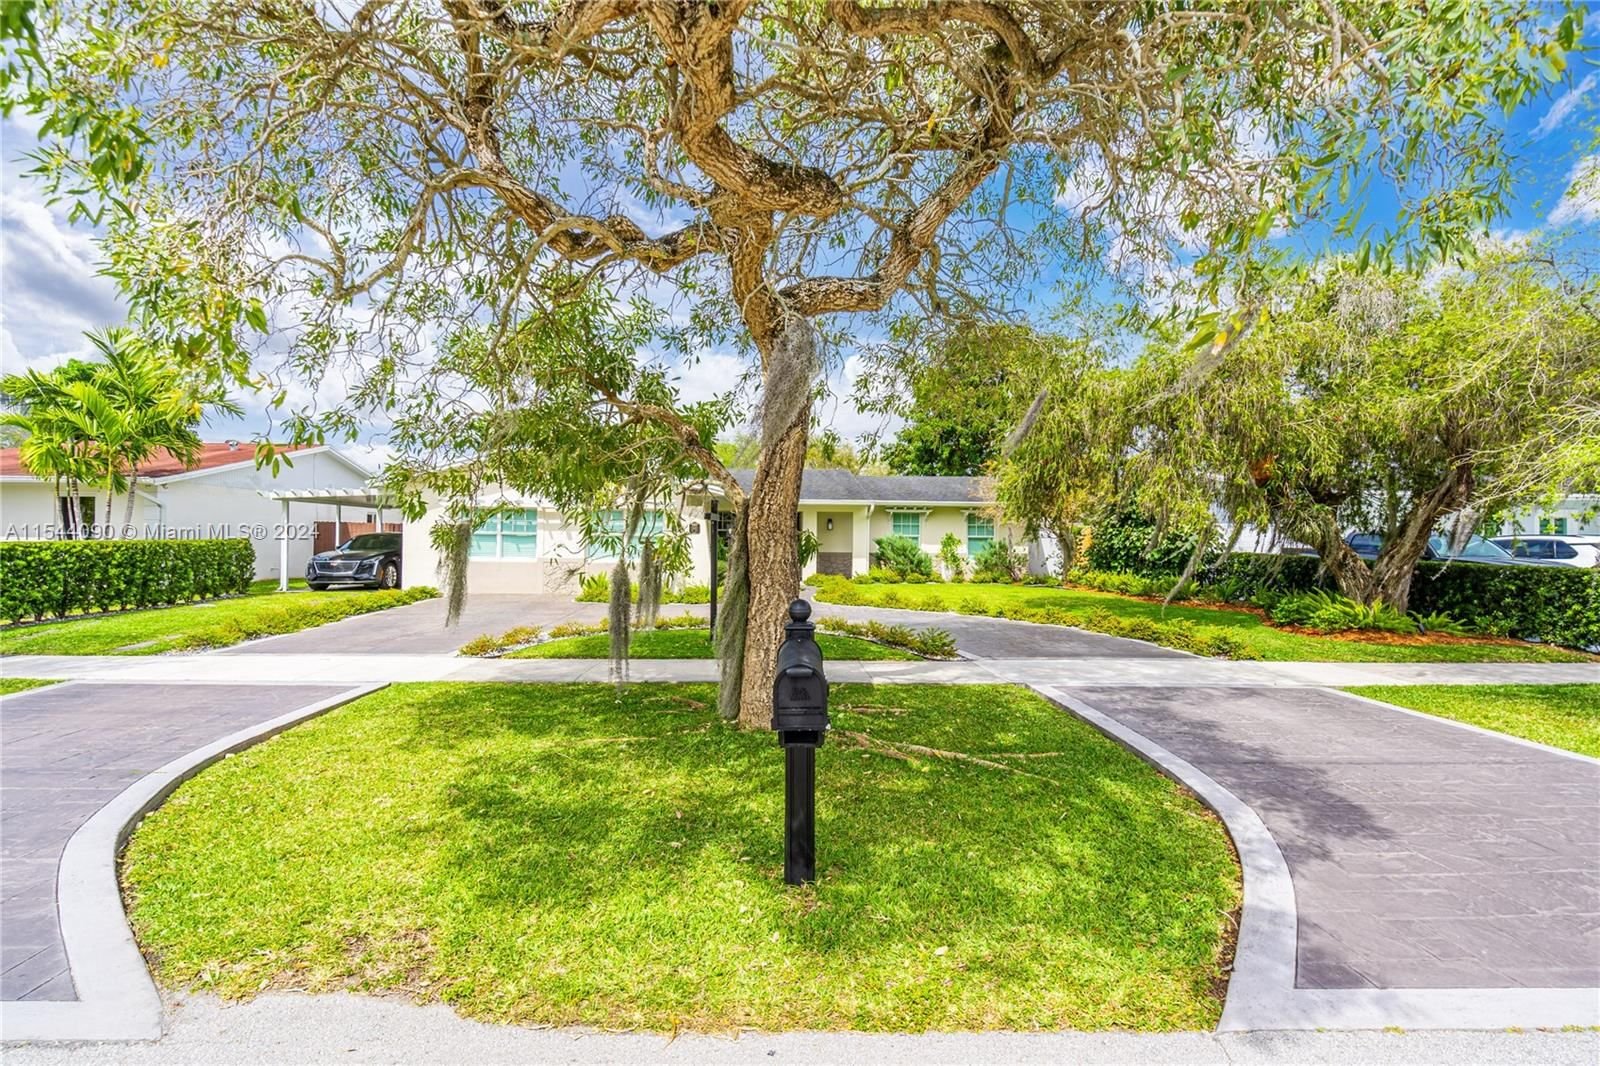 Real estate property located at 13411 79th St, Miami-Dade County, WINSTON PARK UNIT 4, Miami, FL